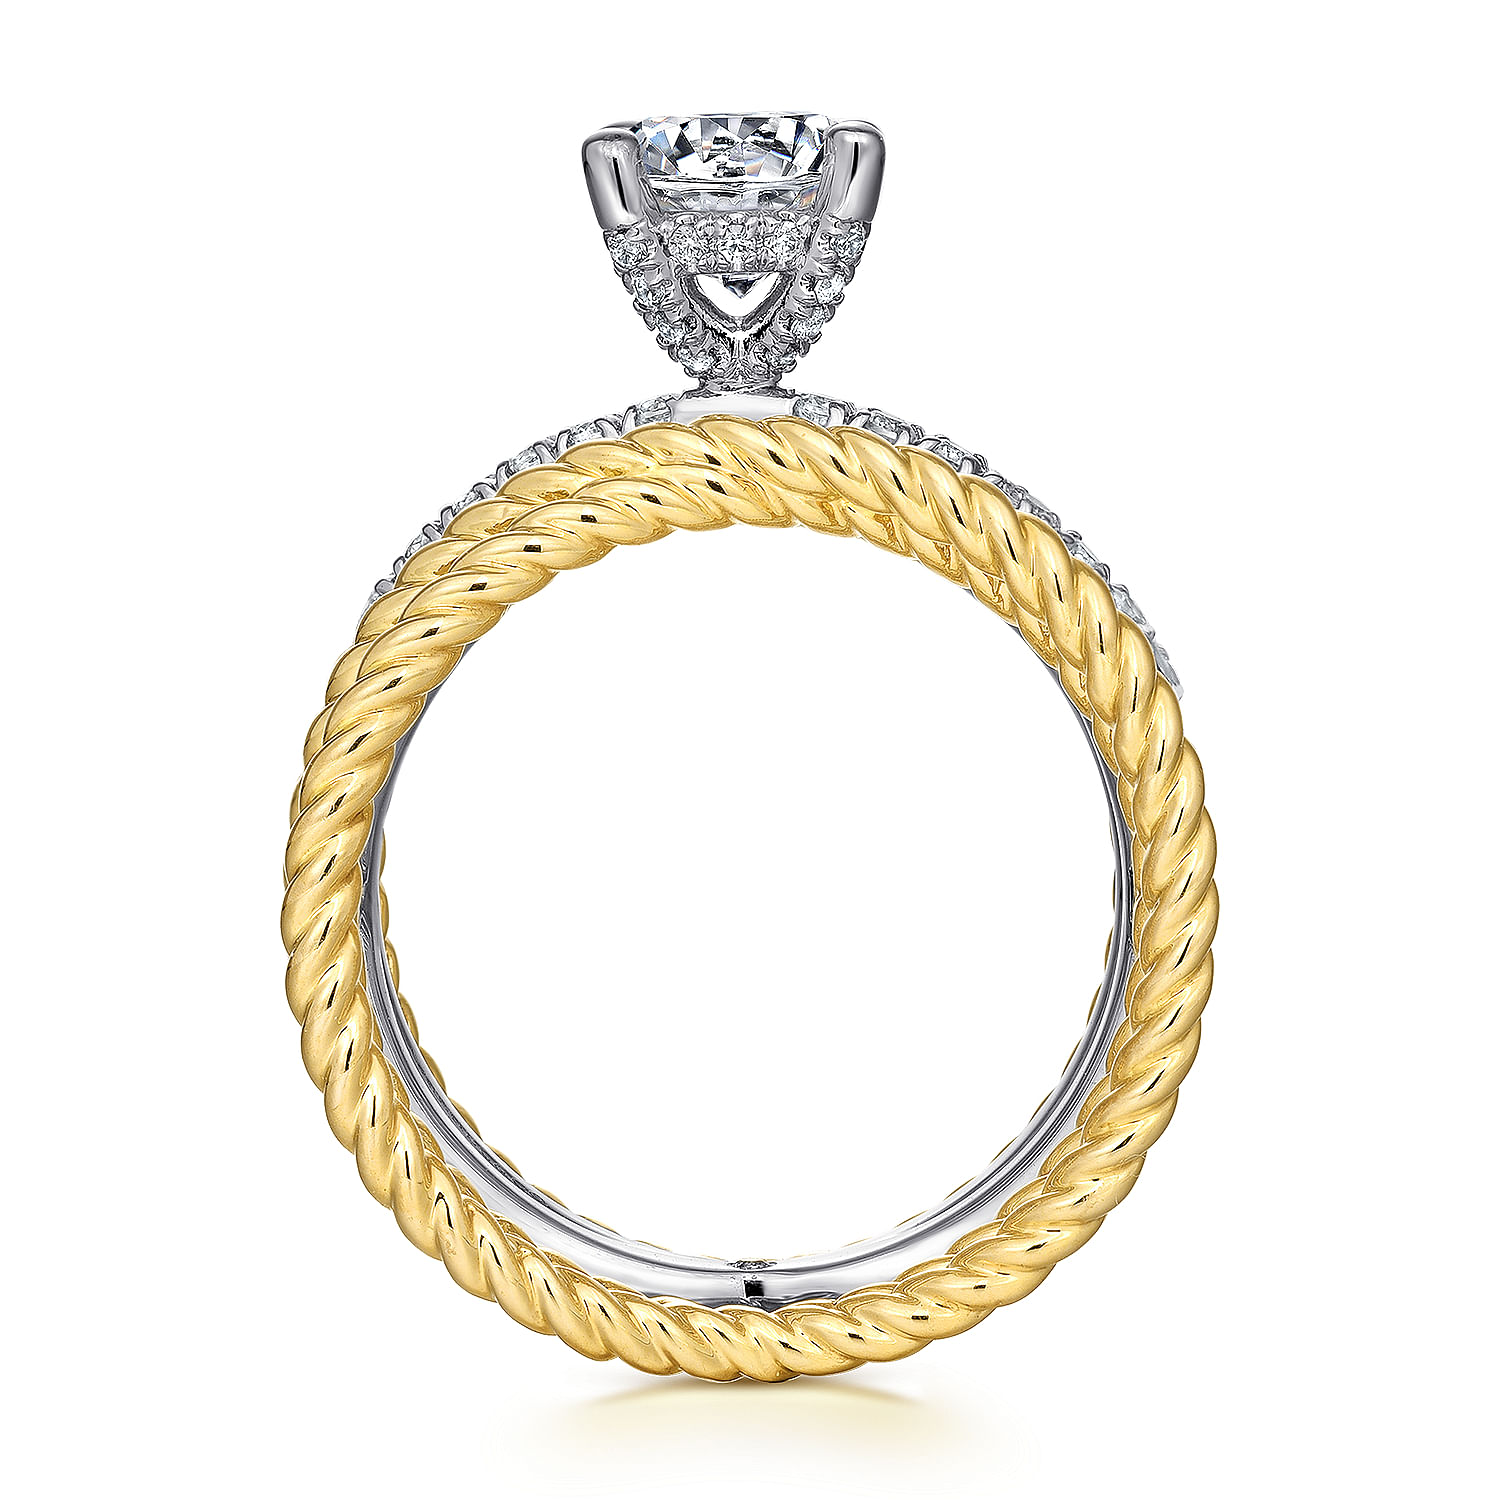 14K White-Yellow Gold Free Form Round Diamond Engagement Ring